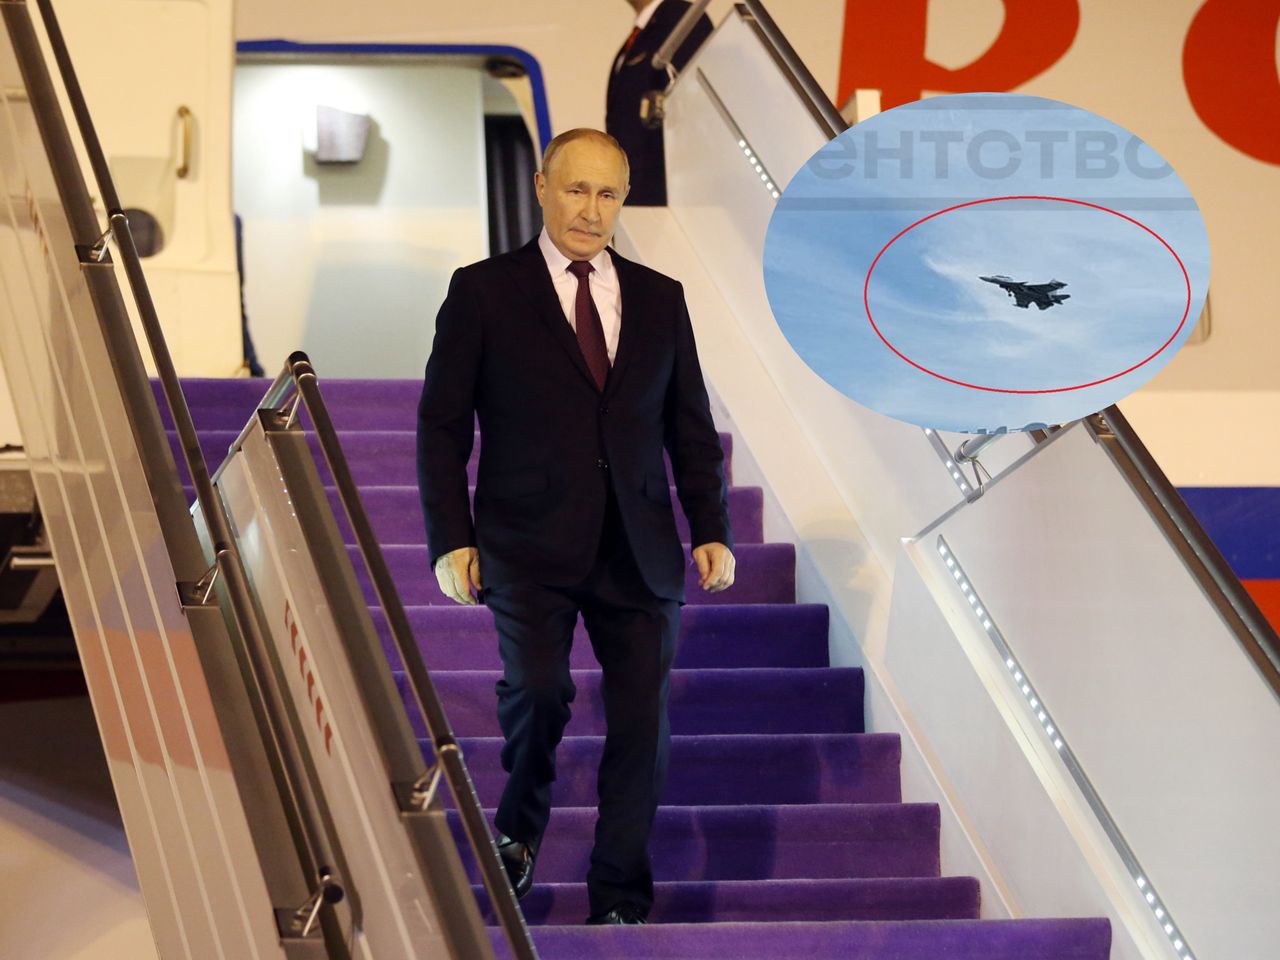 Putin flies accompanied by fighter jets.